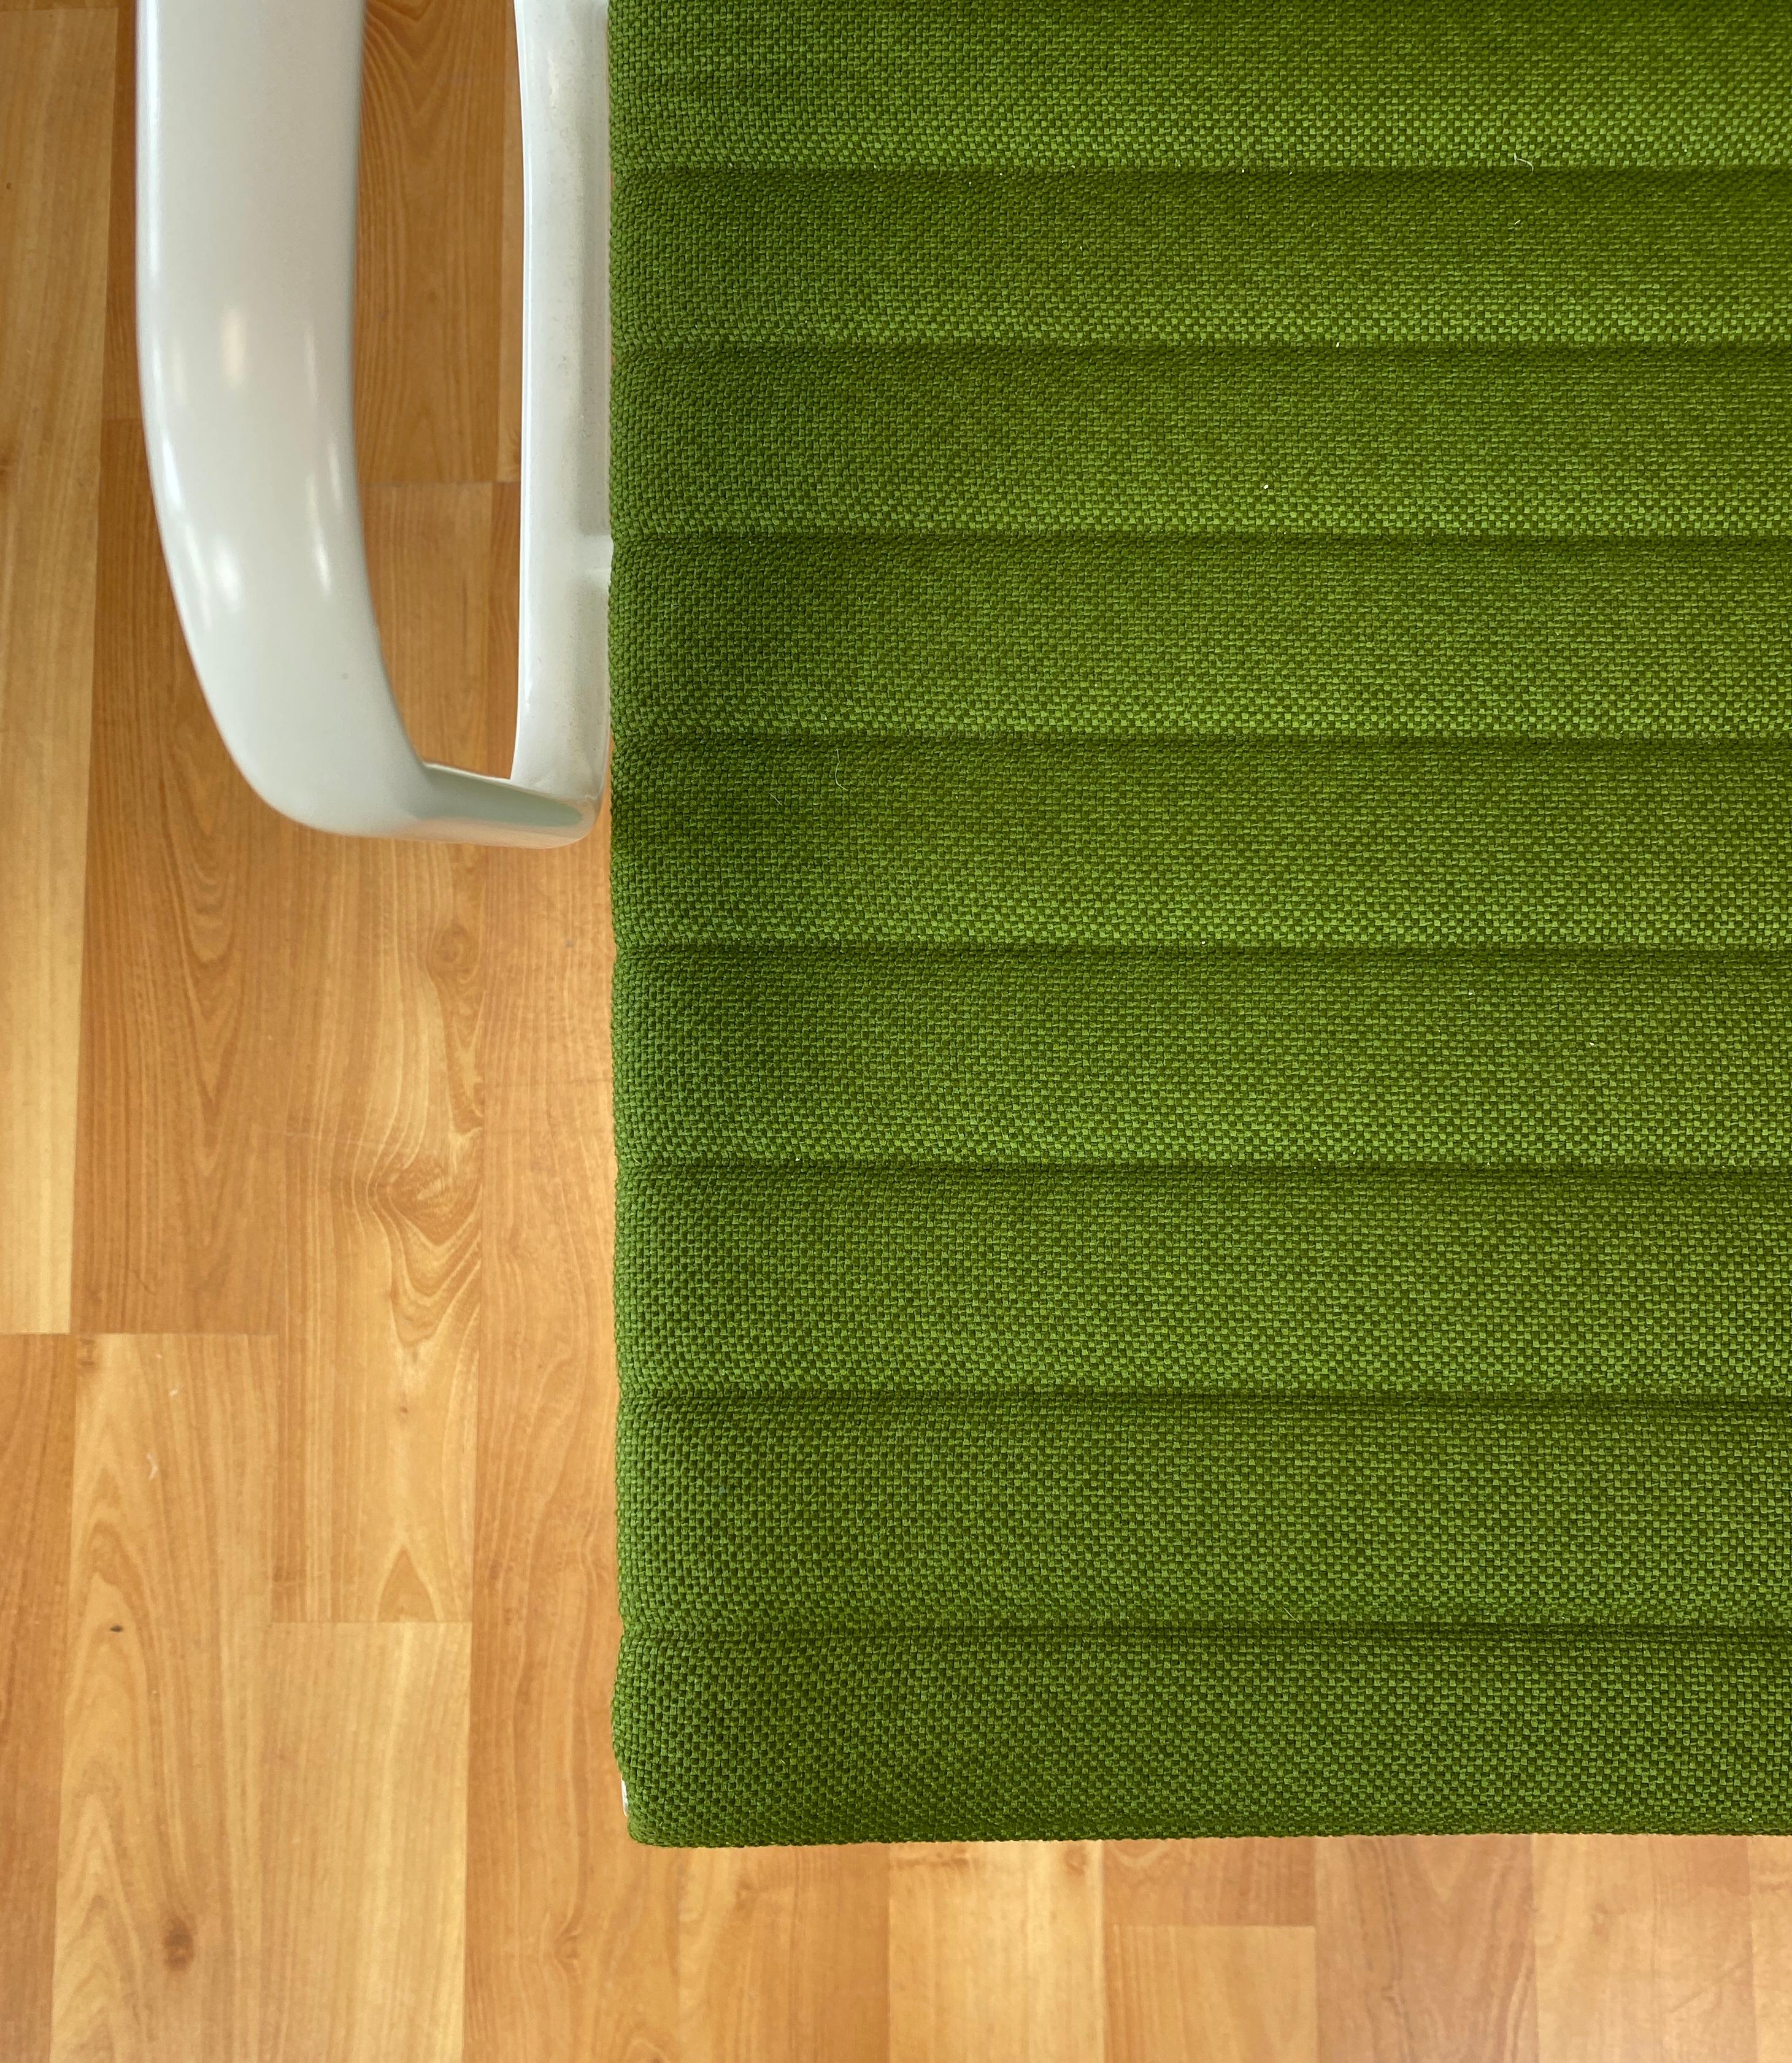 Eames Aluminum Group Side Chair, White Frame, Light Olive Green Upholstery 4